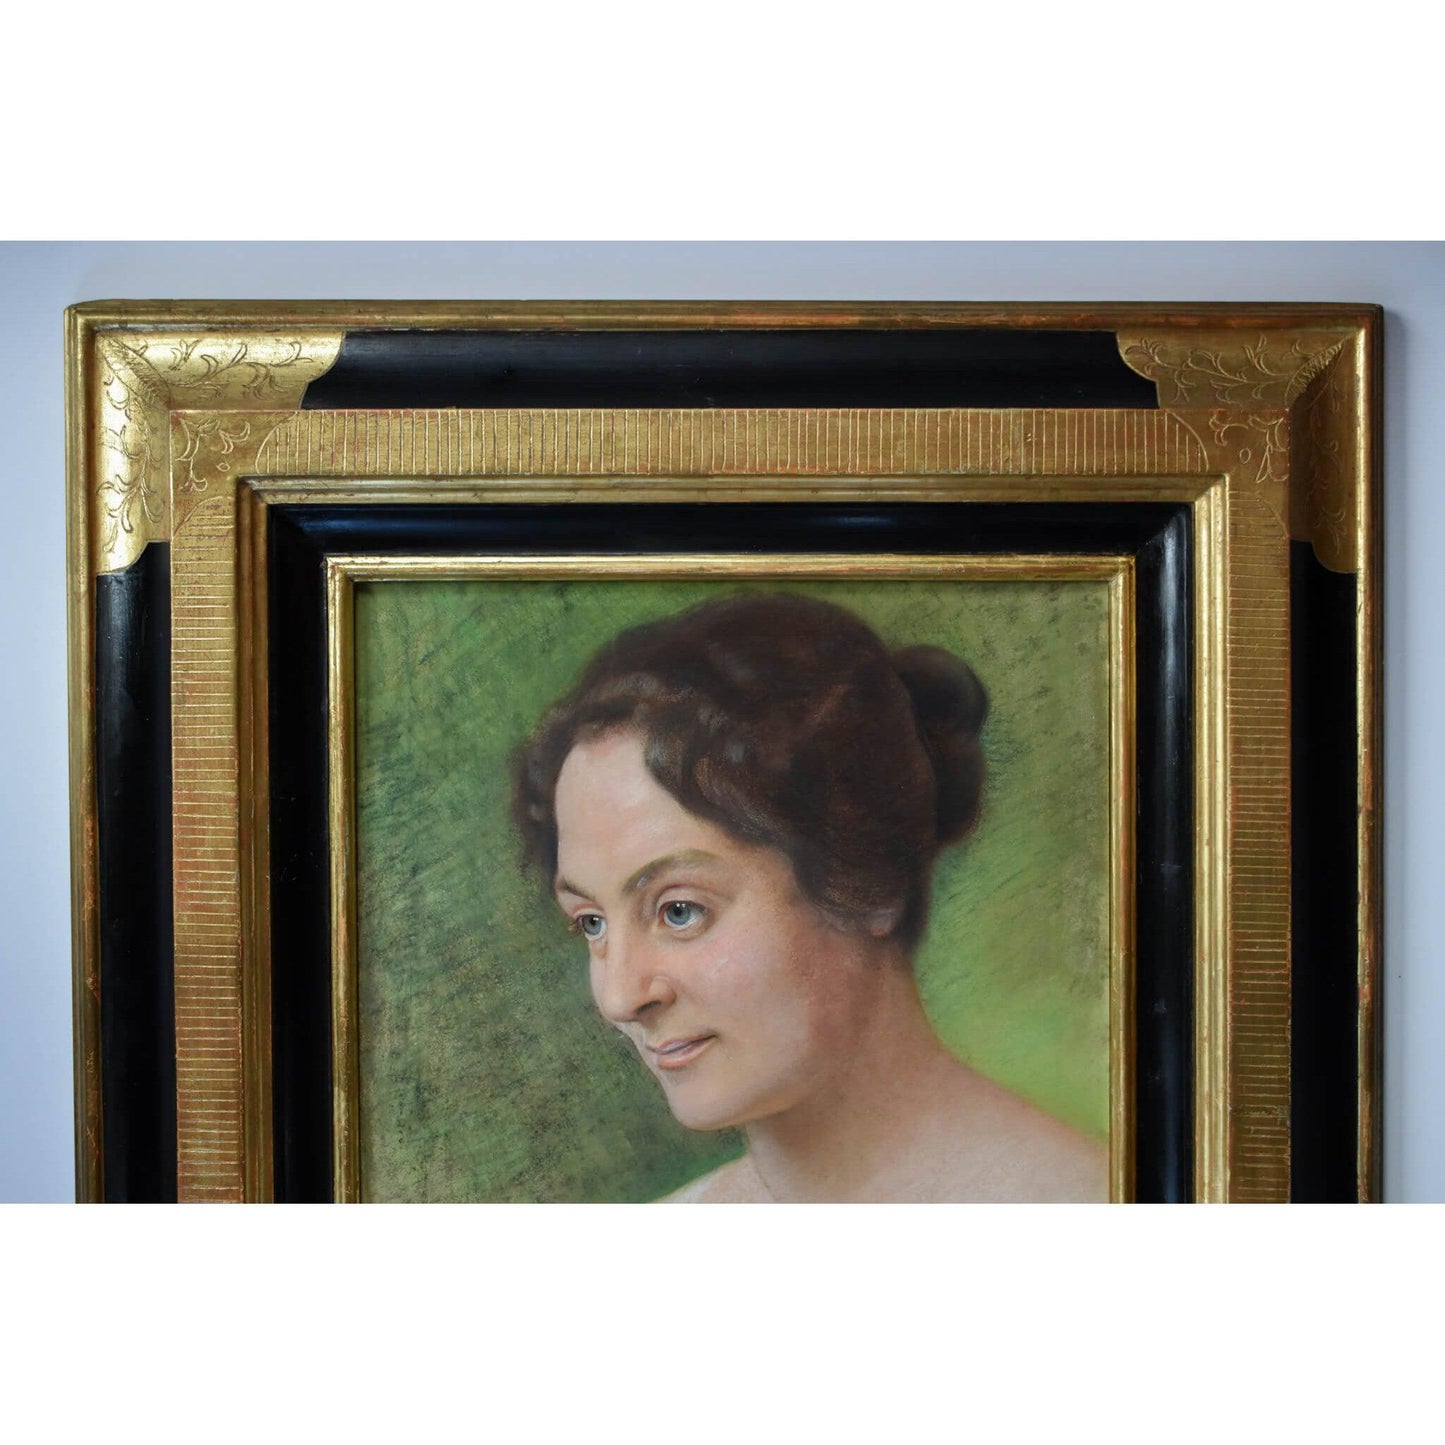 Antique portrait pastel painting woman blue eyes original 1919 by Paul Beckert for sale at Winckelmann Gallery